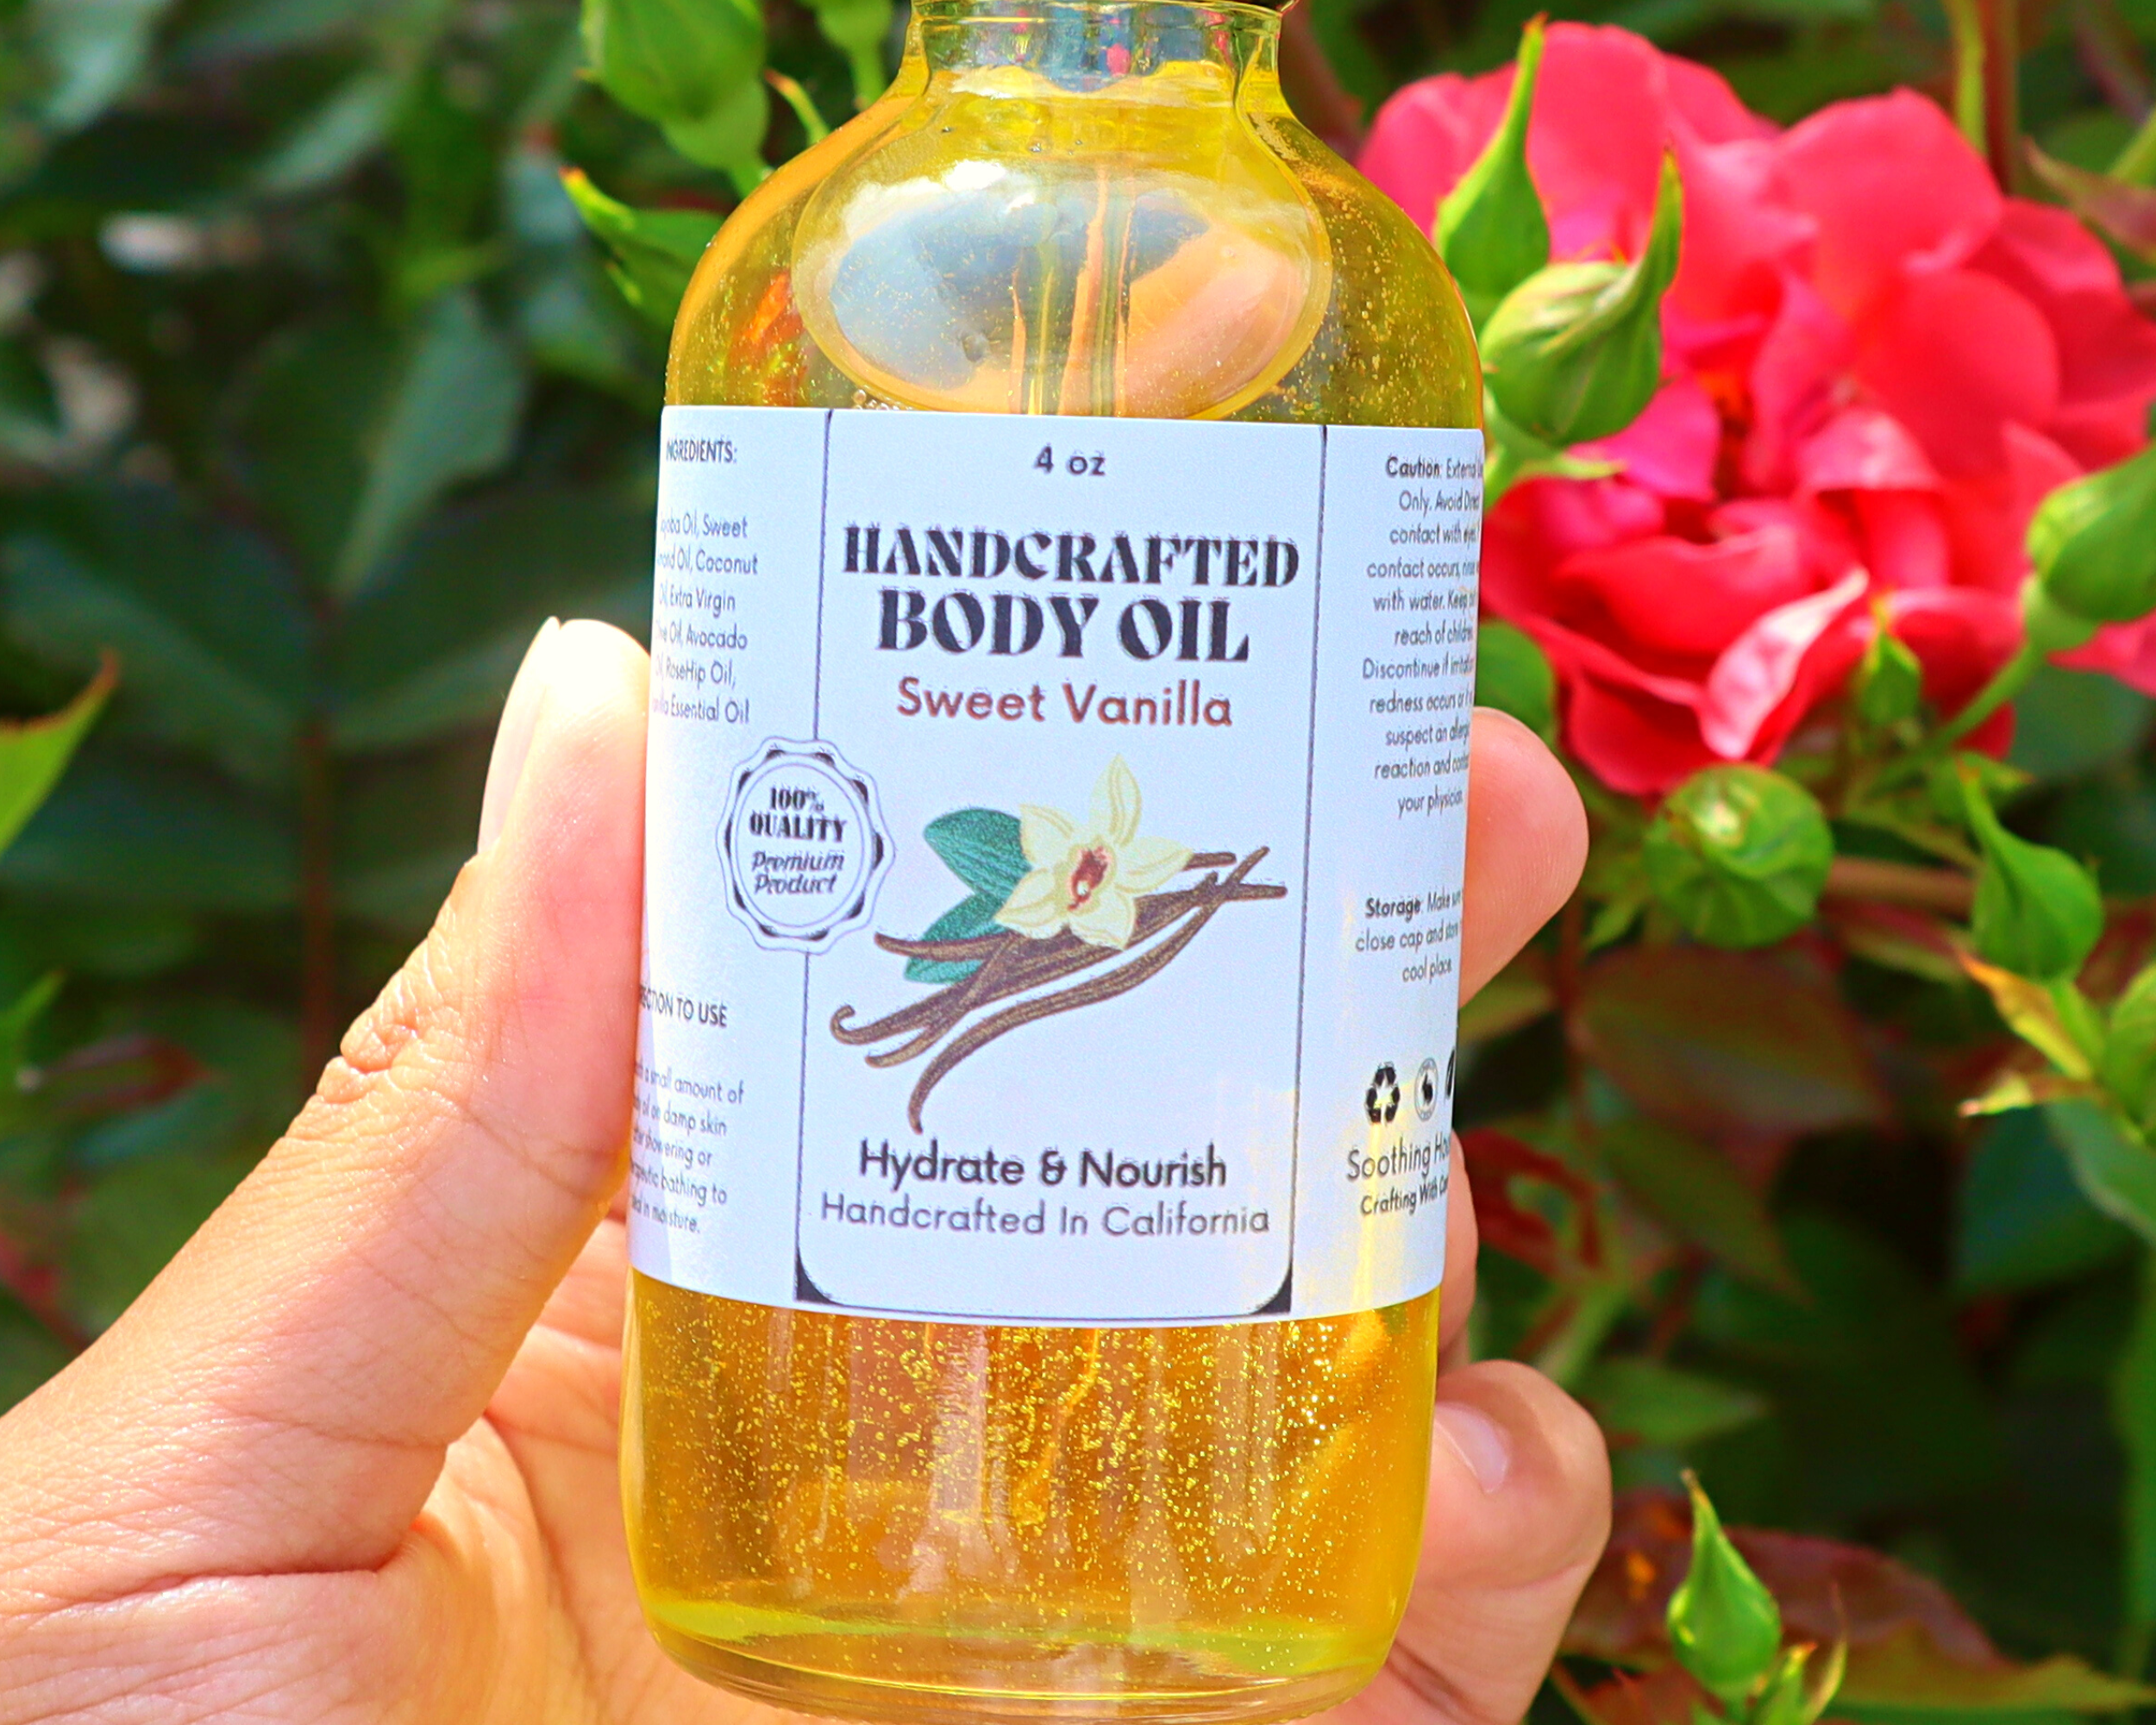 Abiyah Naturals Lavender Vanilla Body Oil 4 OZ – Abiyah Naturals Handmade